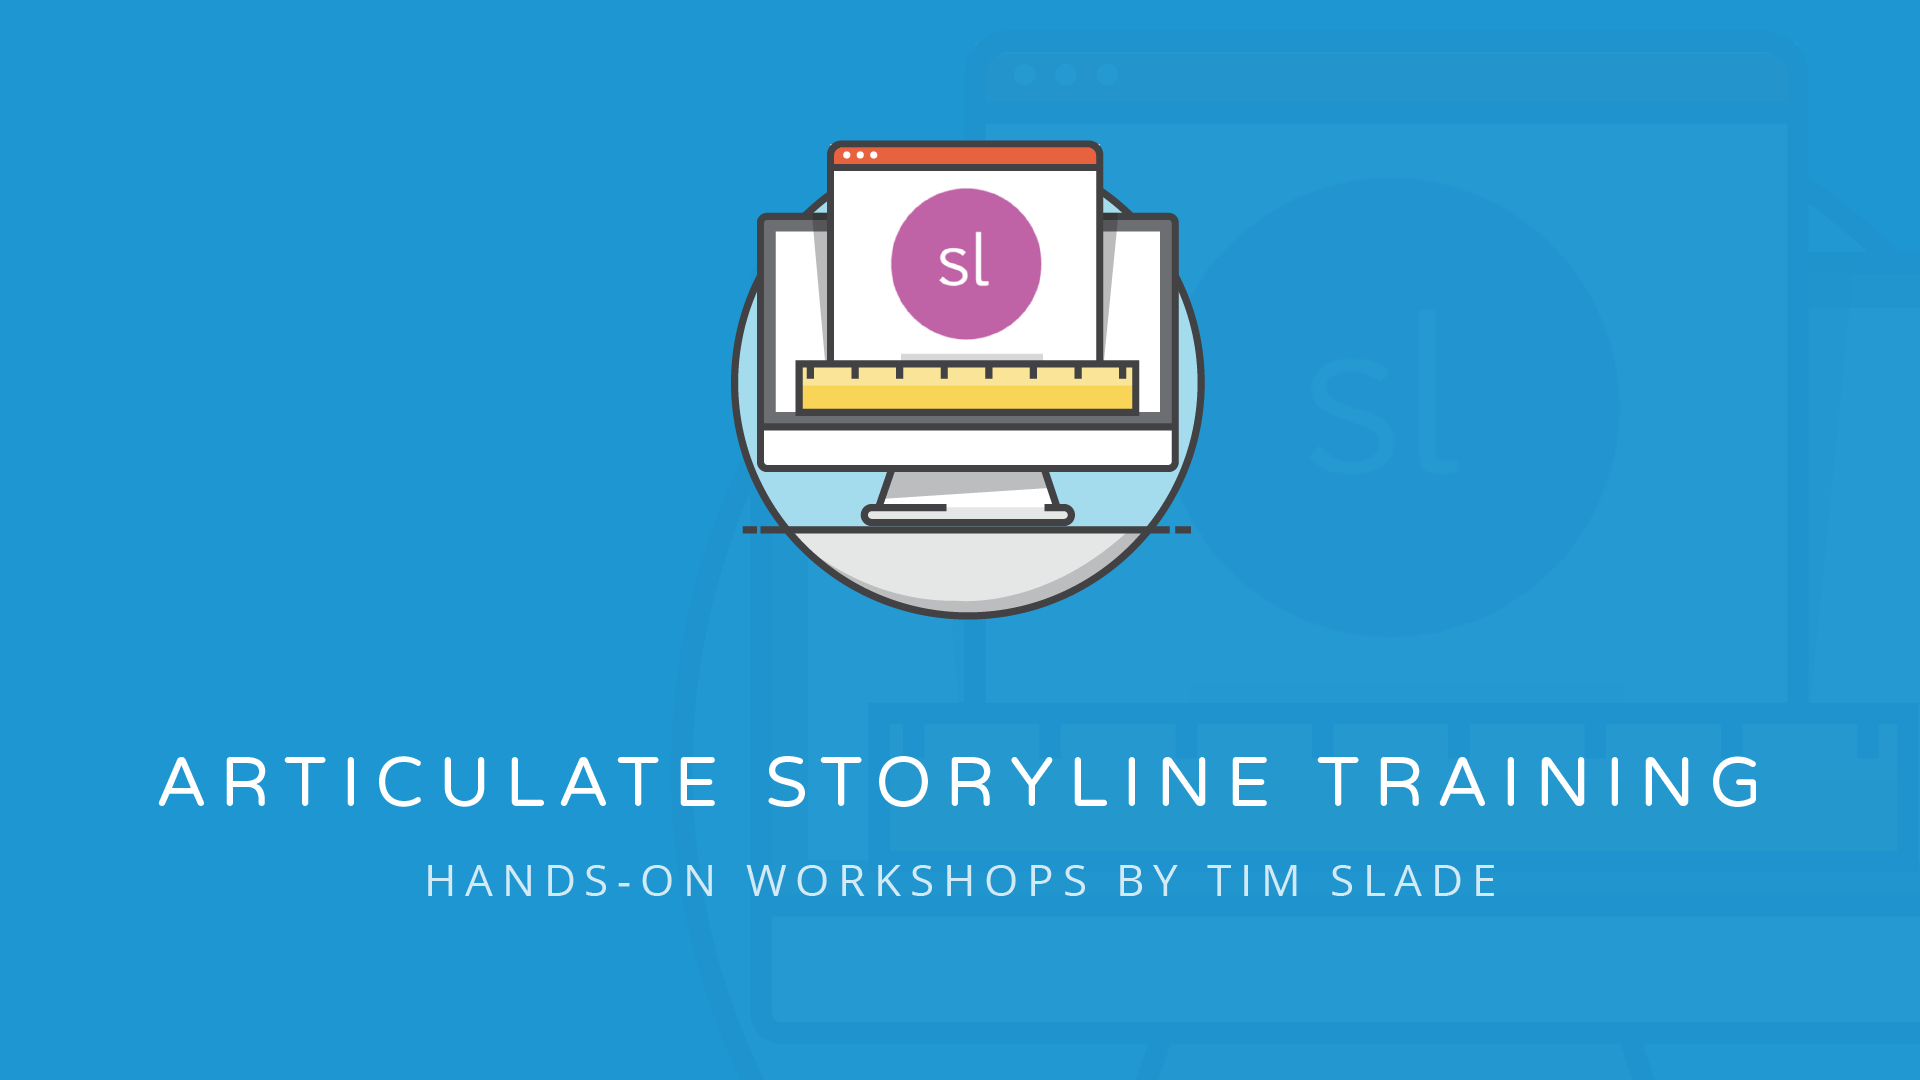 Hands-on Articulate Storyline Training Workshop by Tim Slade, Advanced Articulate Storyline Training, eLearning Workshops